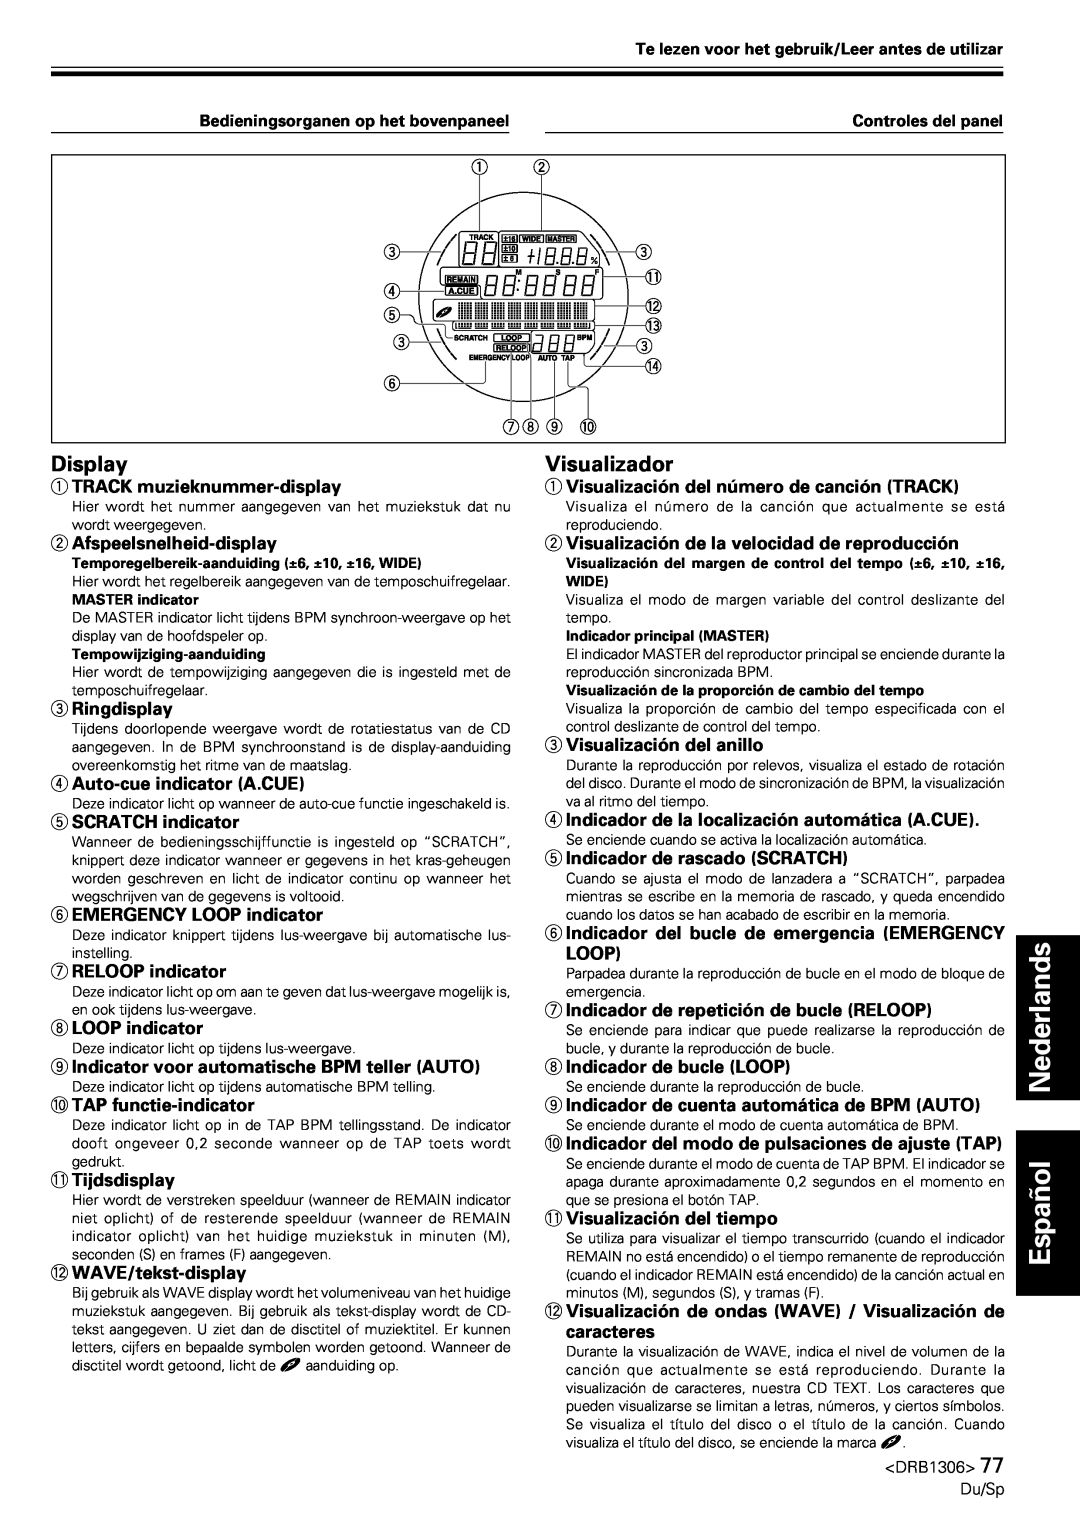 Pioneer CMX-3000 operating instructions Visualizador, Español Nederlands, Display 